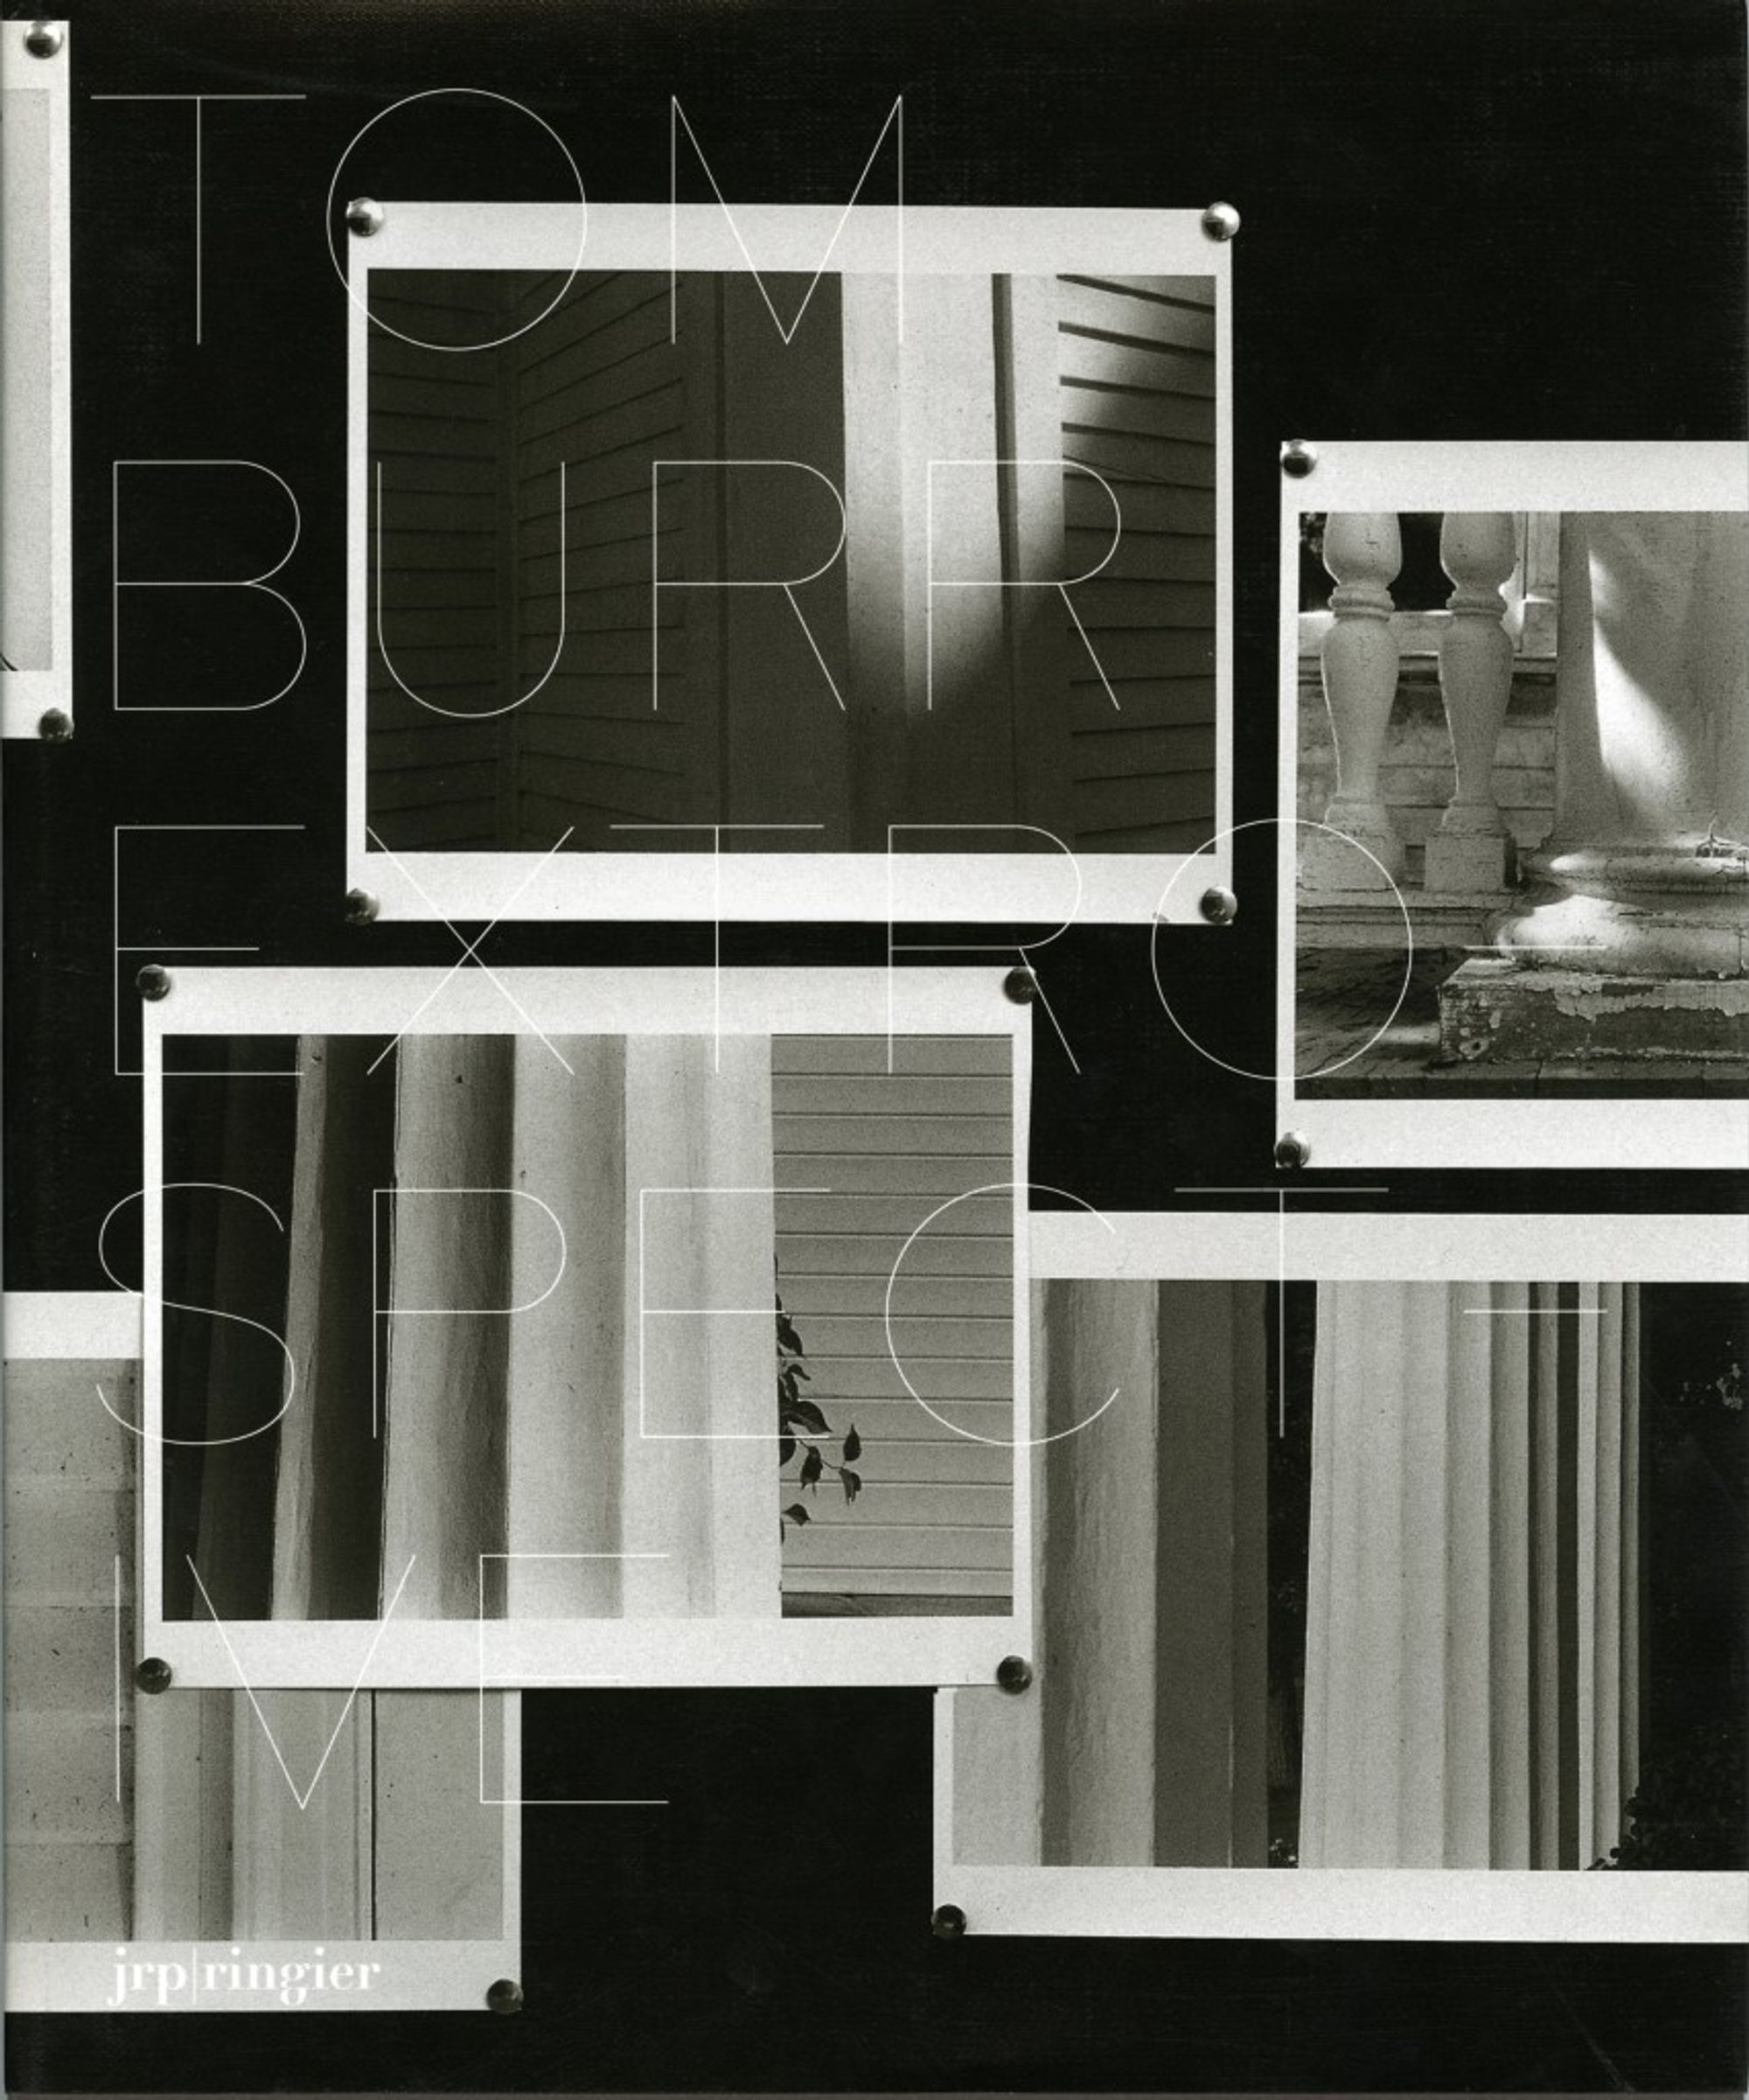 Detail view of Tom Burr: Extrospective against a plain gray background